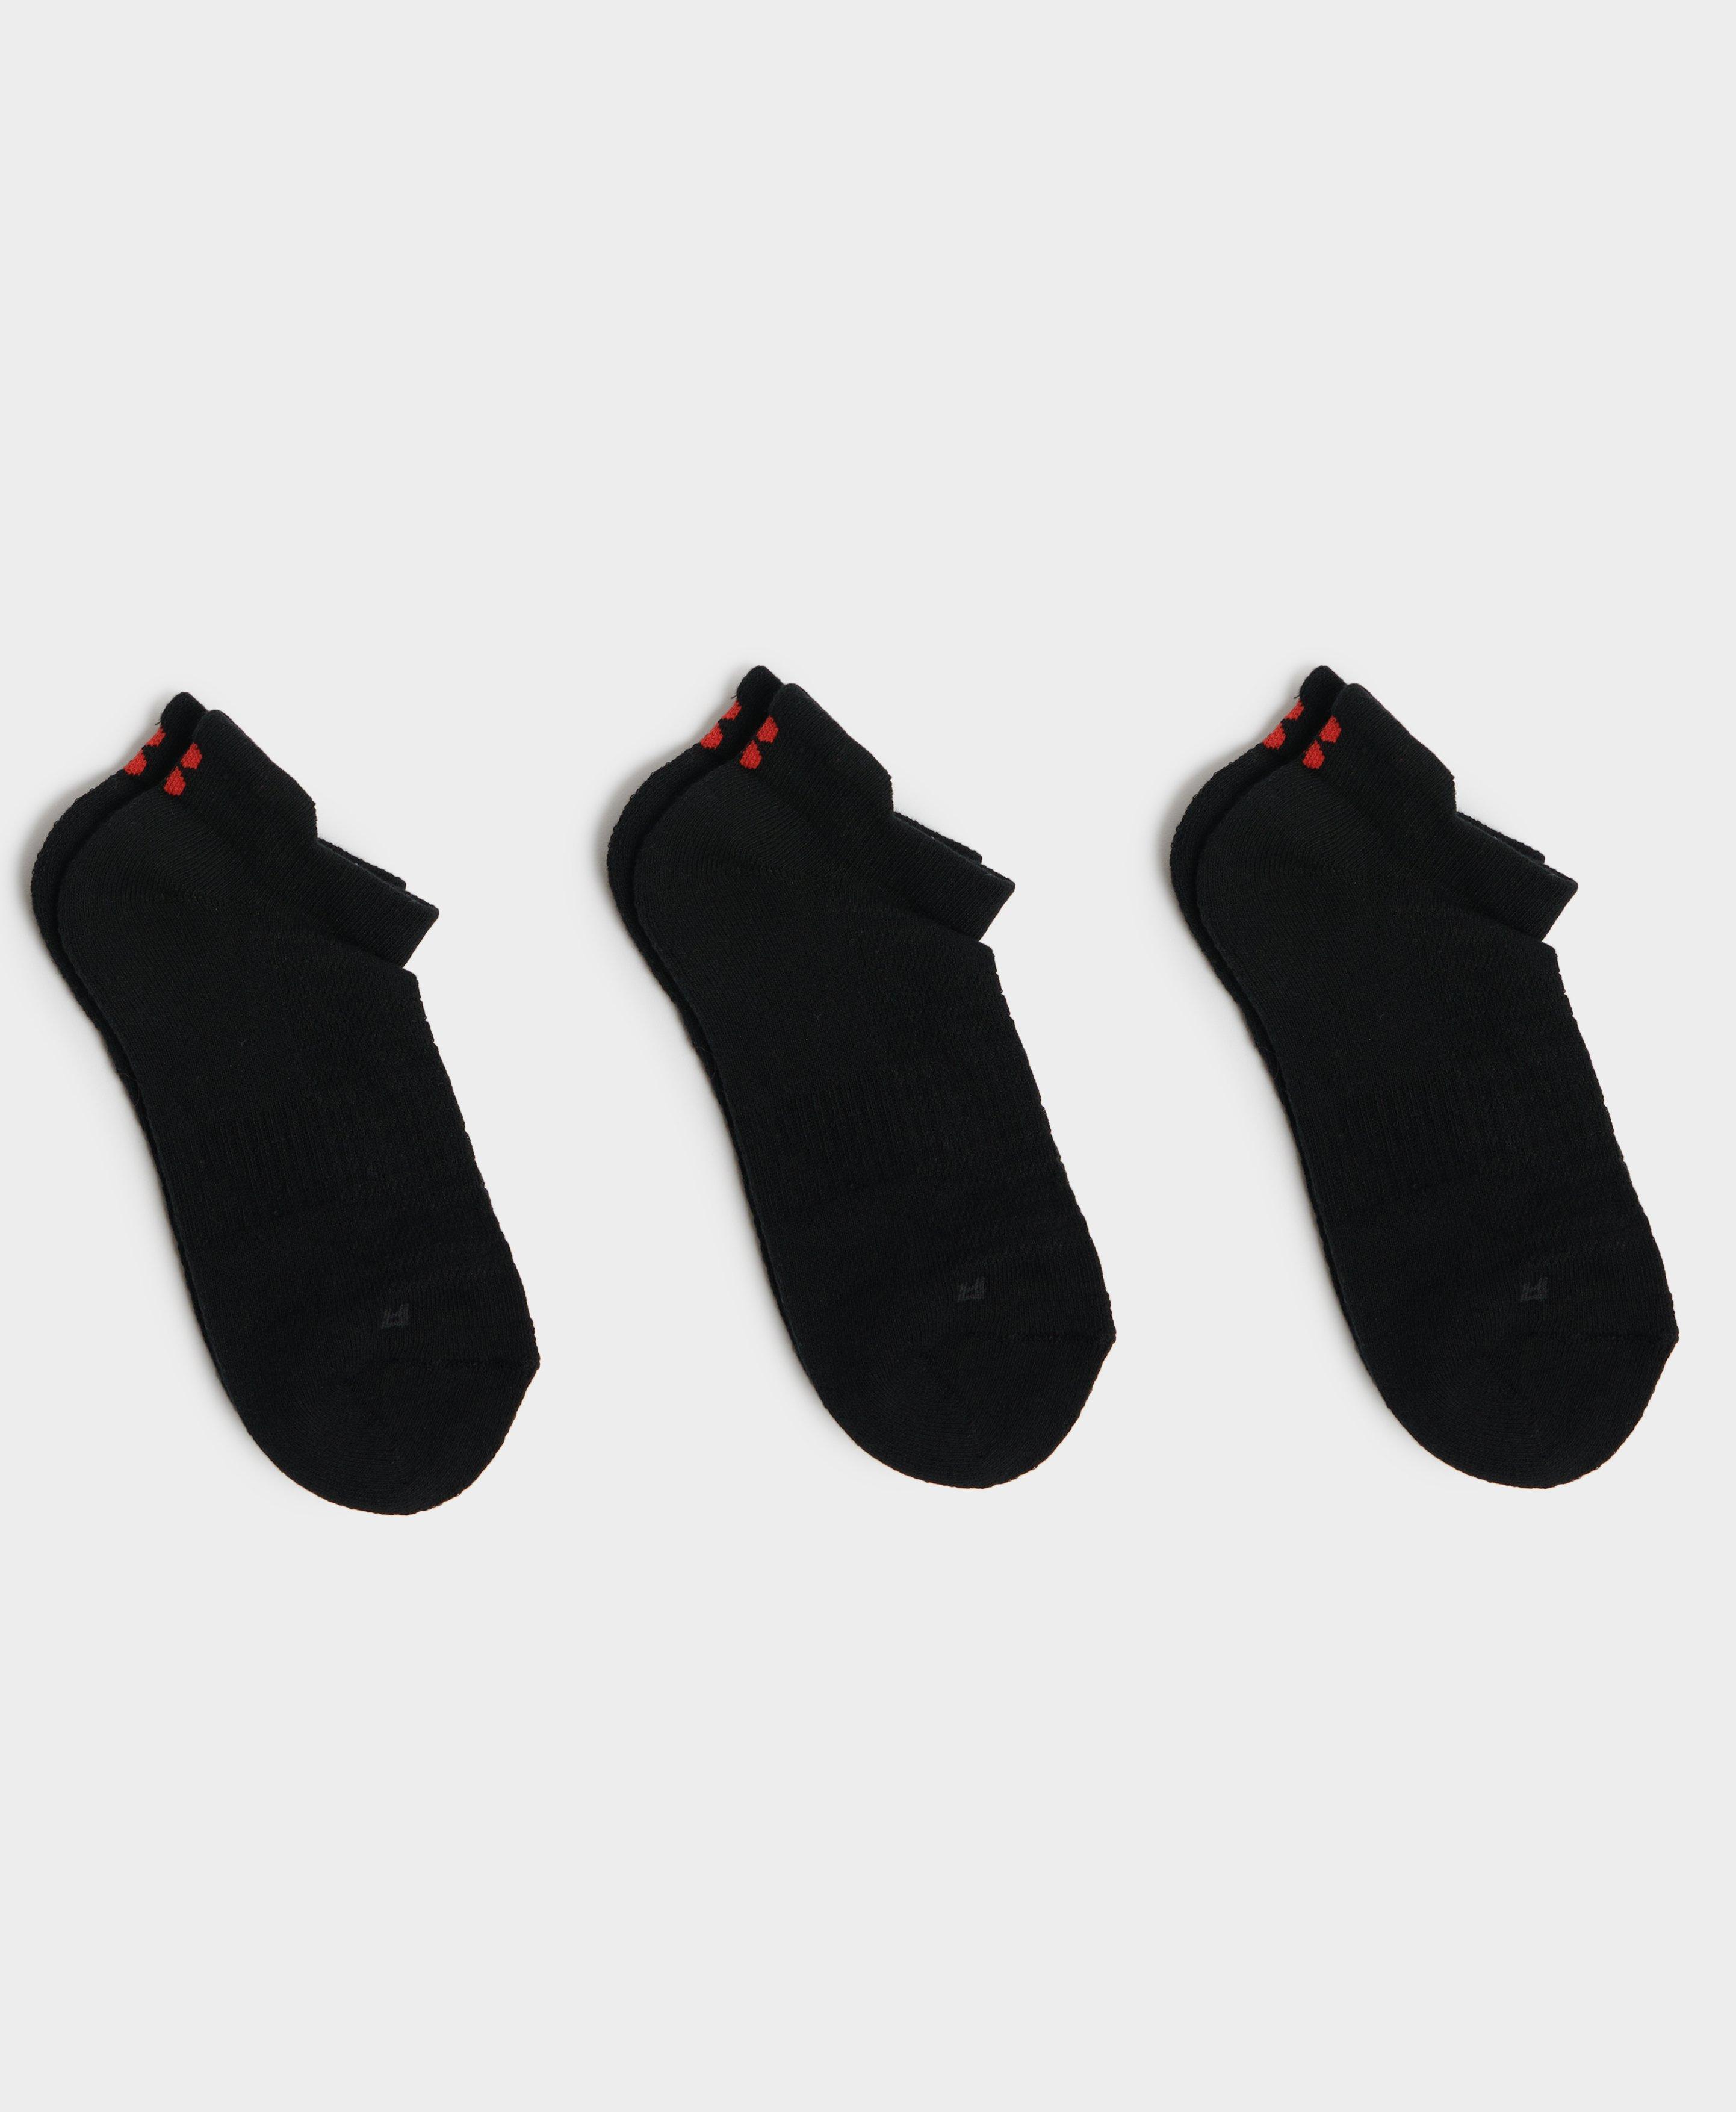 Men's Accessories, Yoga Socks, Gloves, & More